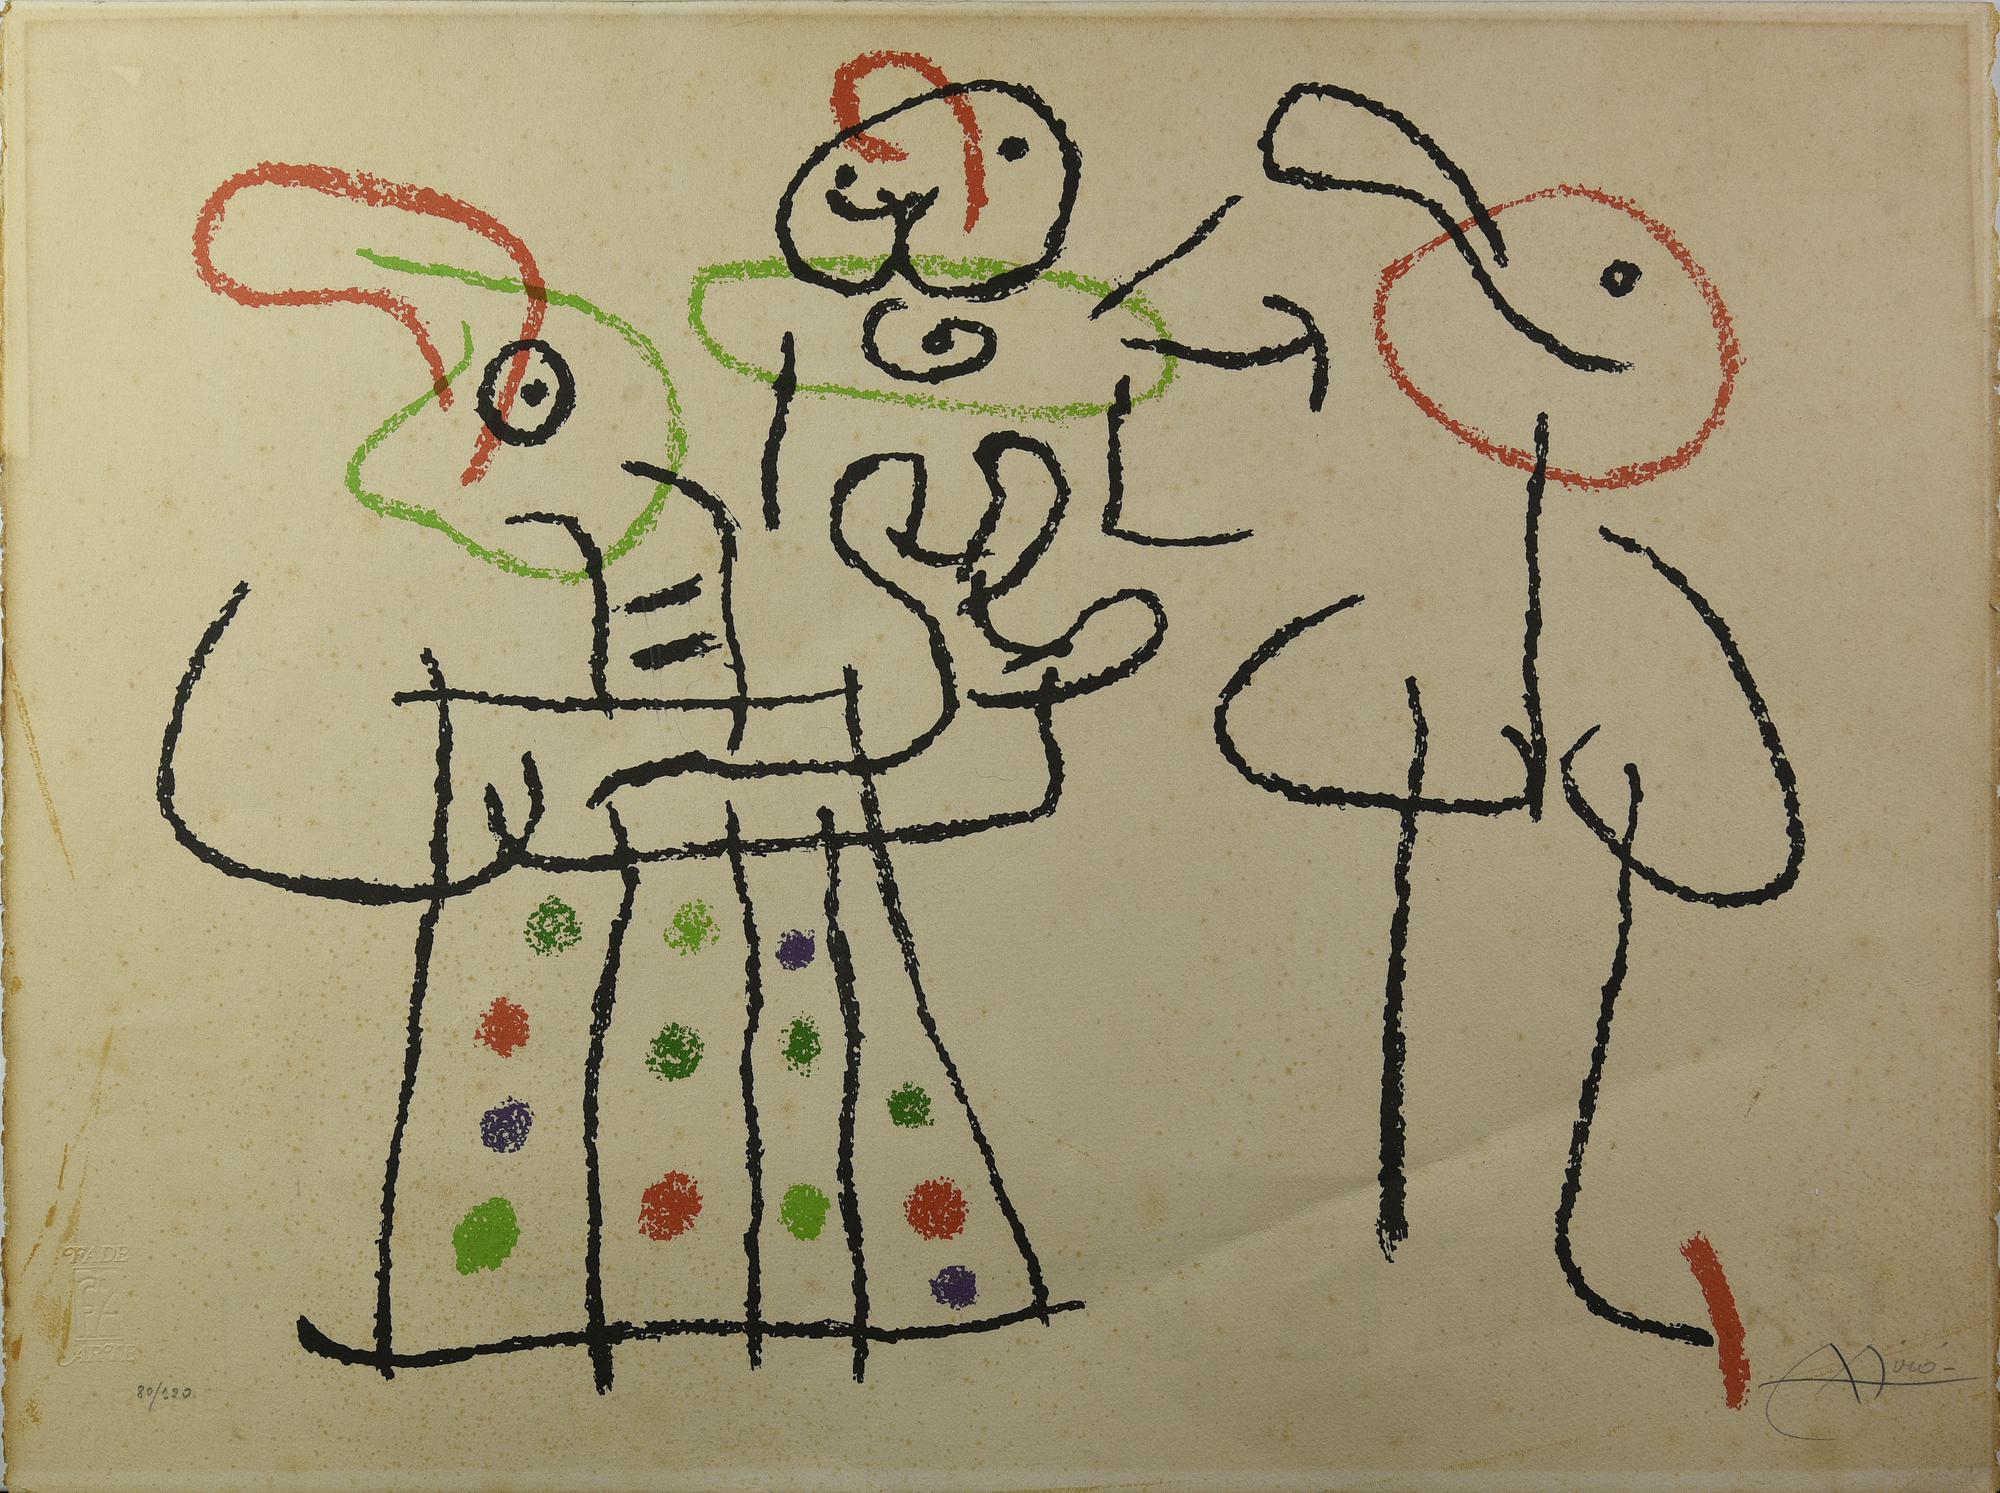 Joan Miro' UBU AUX BALEARES, 1971 litografia su carta Arches, cm 50x65,8; es....